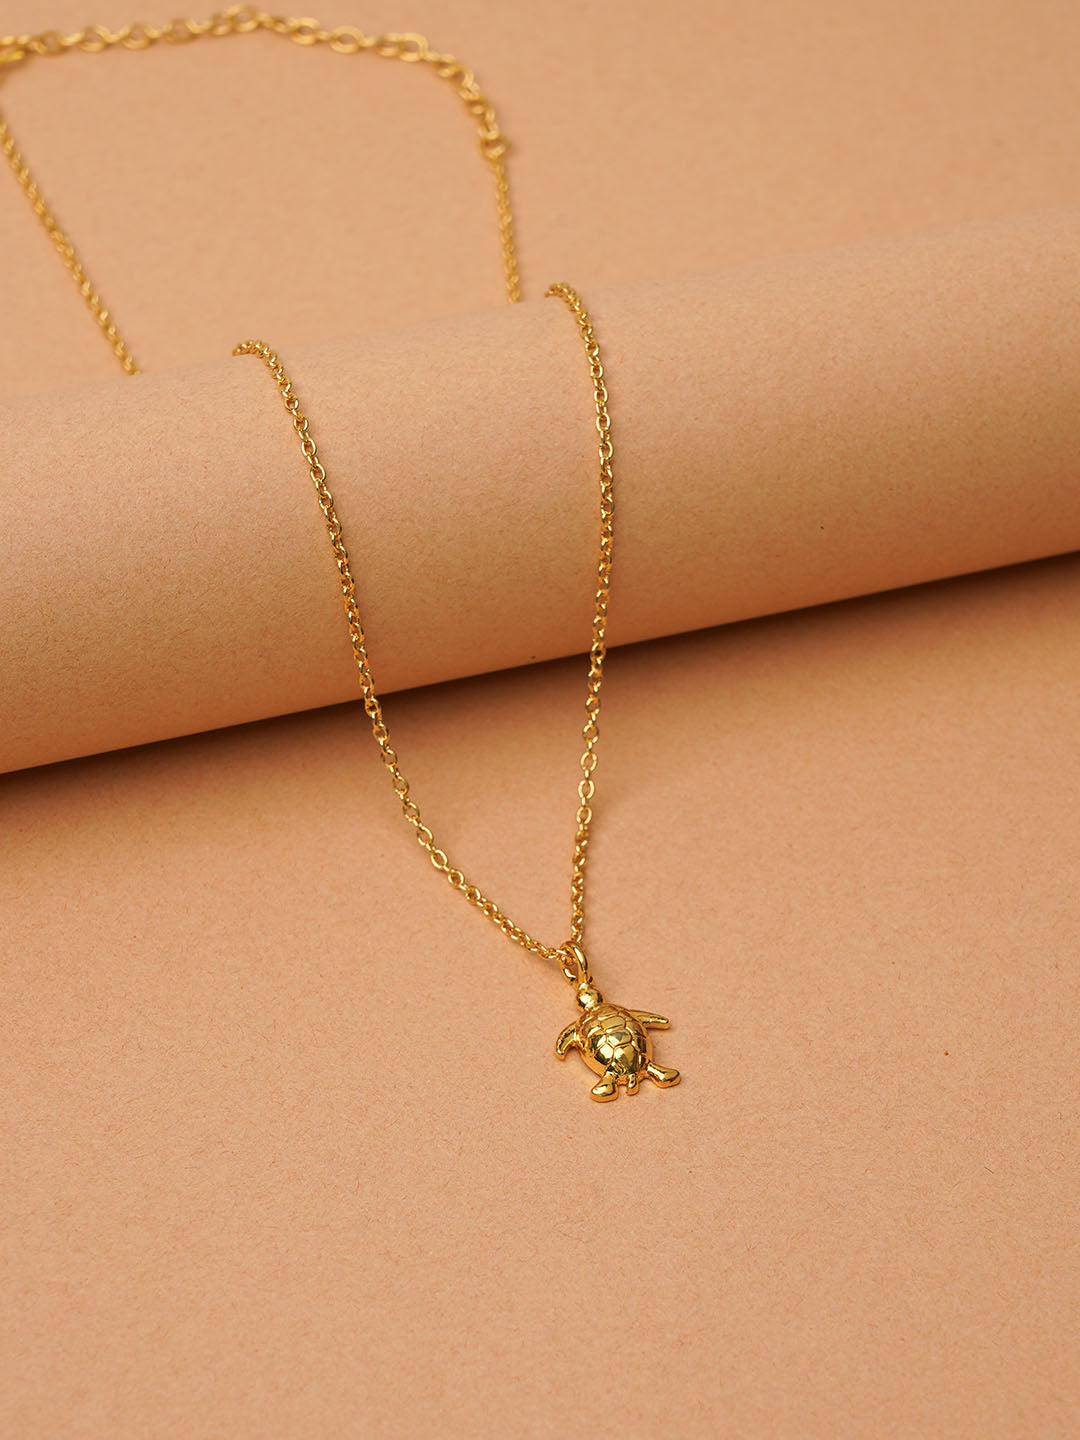 Turtle Necklace - 18K Gold Plated - Lili-Origin